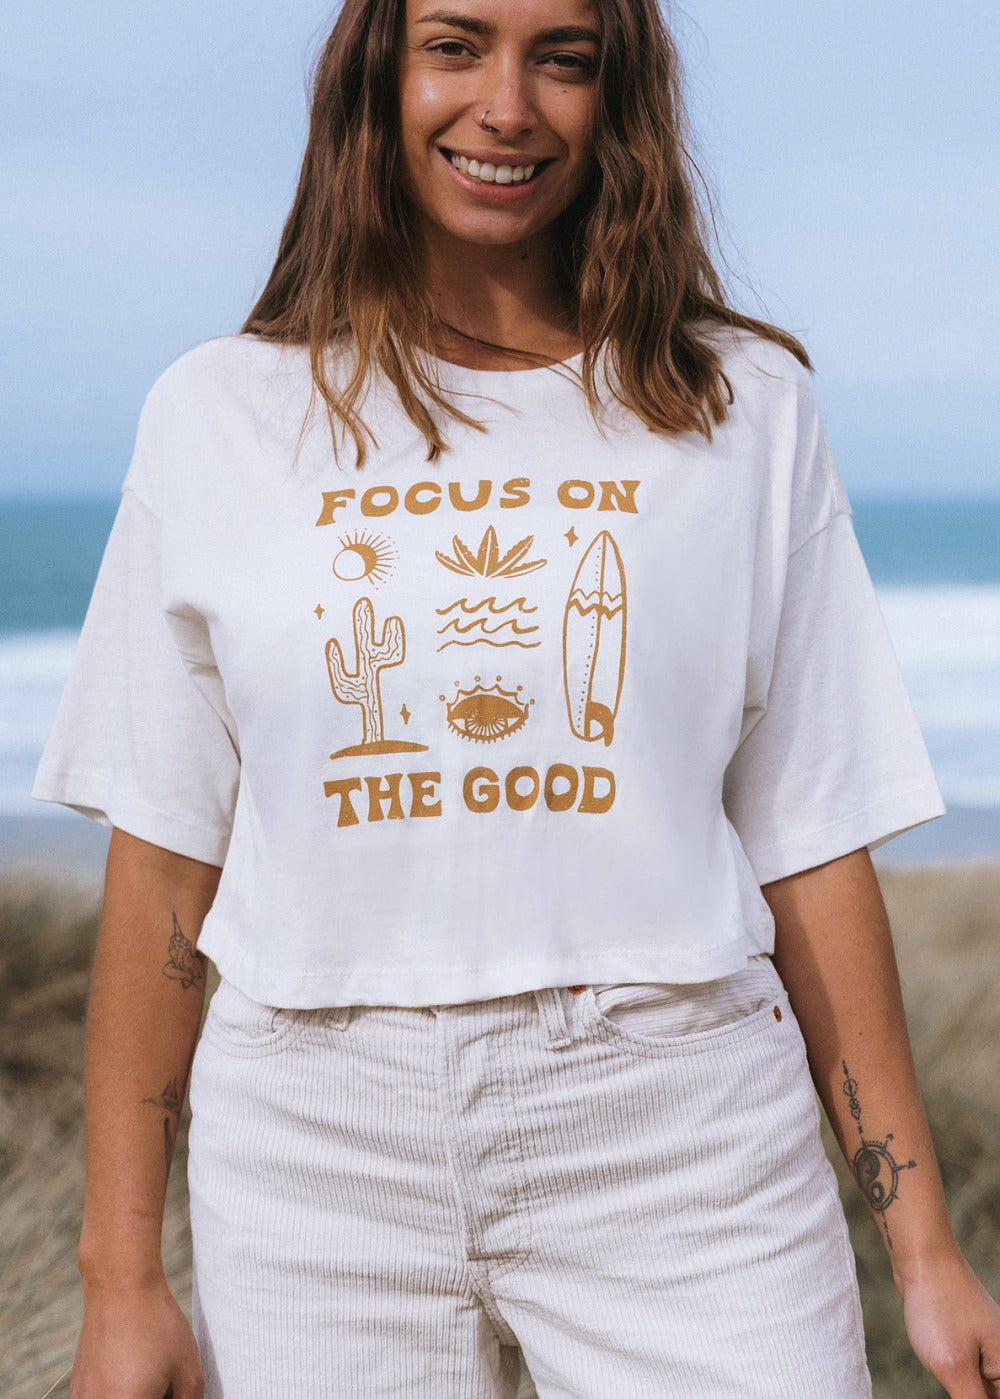 Focus On The Good Tee by SurfGirl